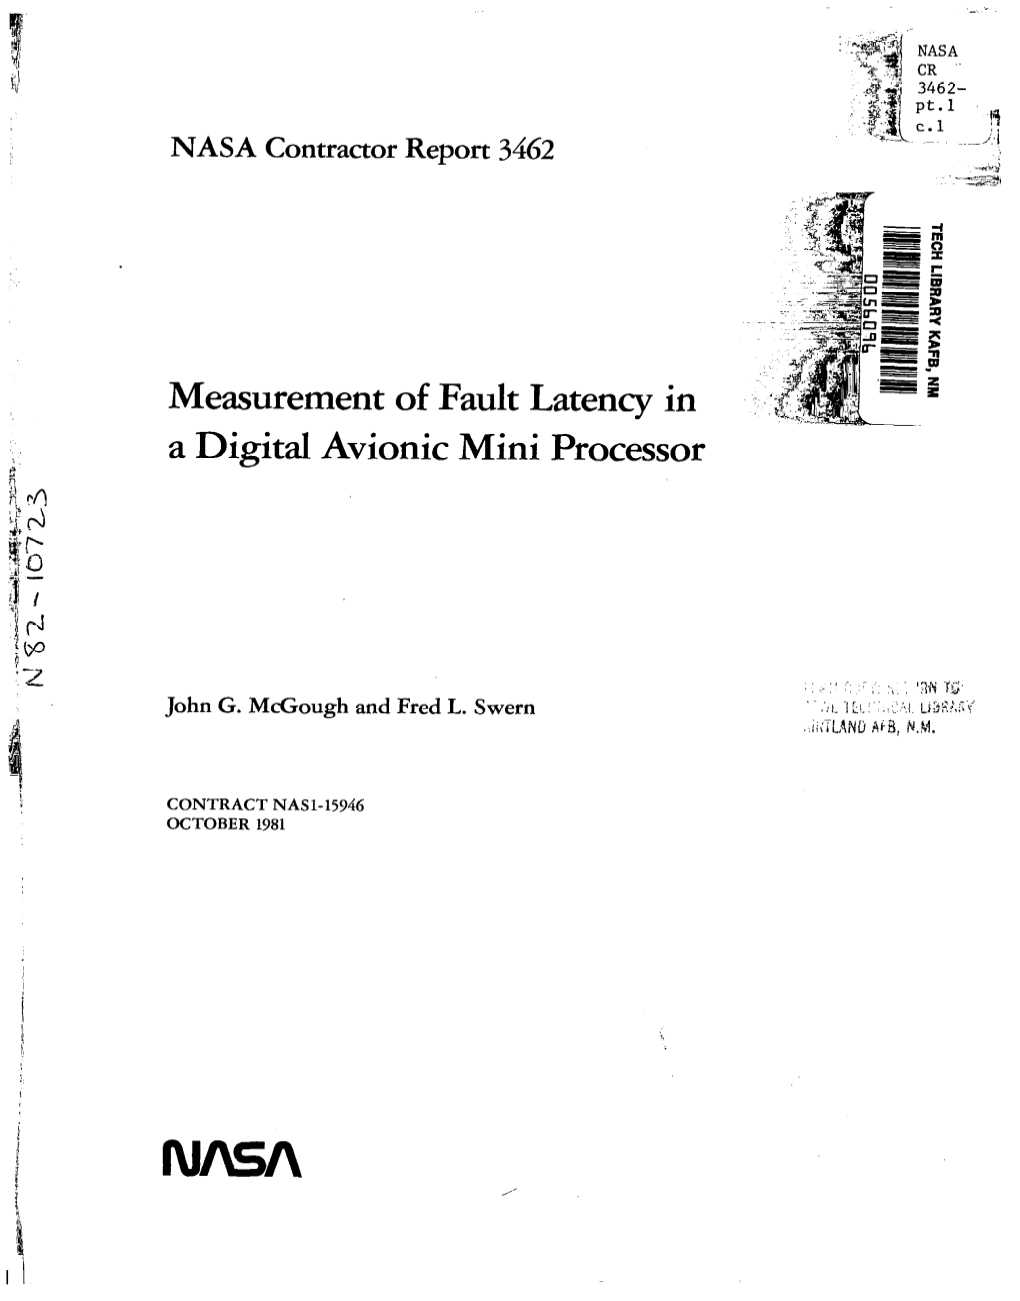 Measurement of Fault Latency in a Digital Avionic Mini Processor